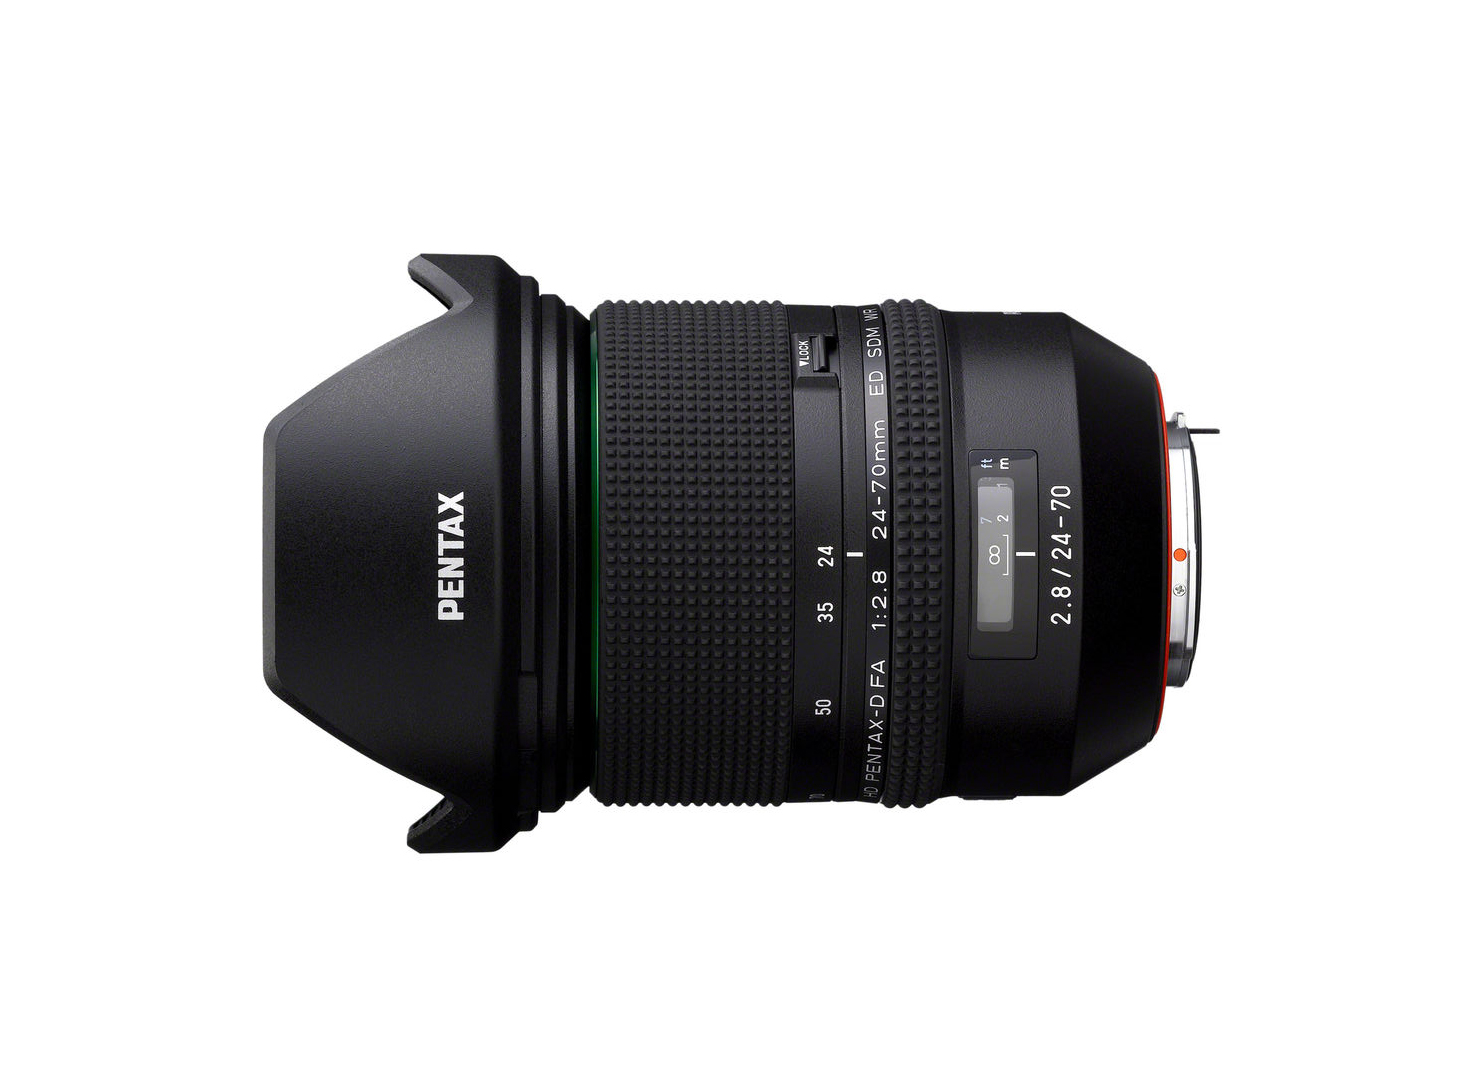 HD PENTAX-D FA 24-70mm f/2.8 ED SDM WR lens - Camera News at Cameraegg